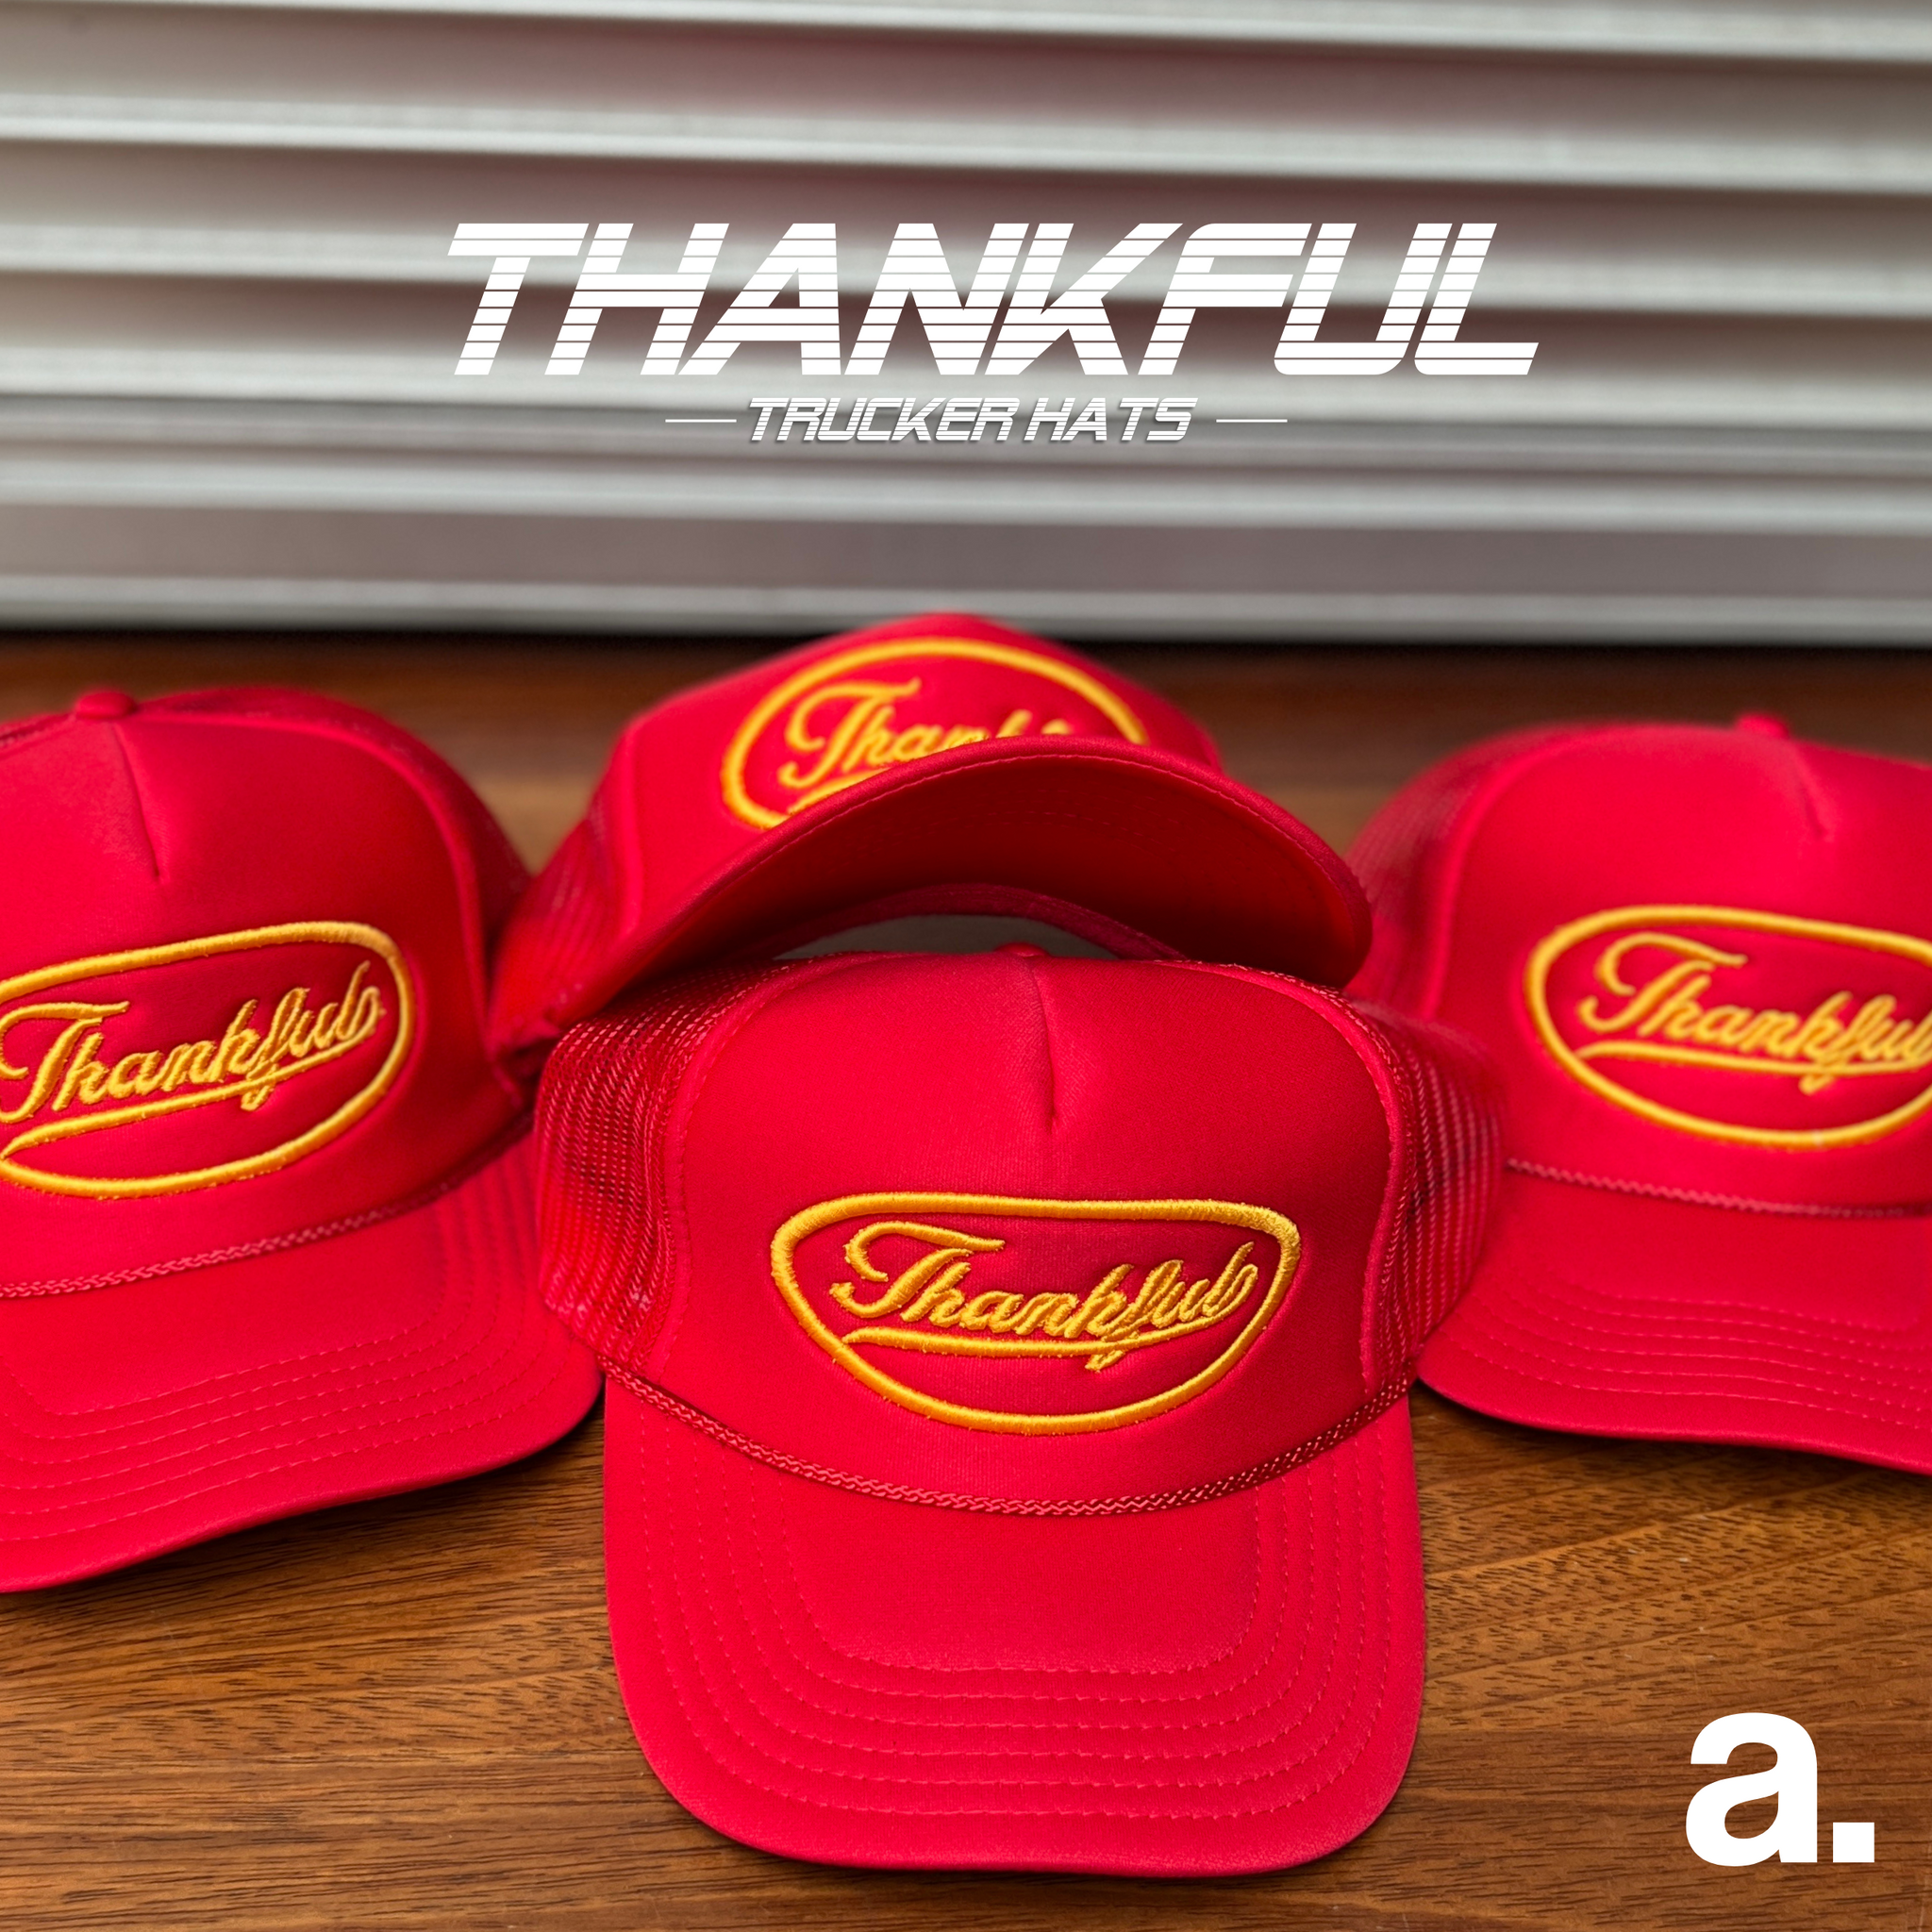 Red Thankful trucker hat